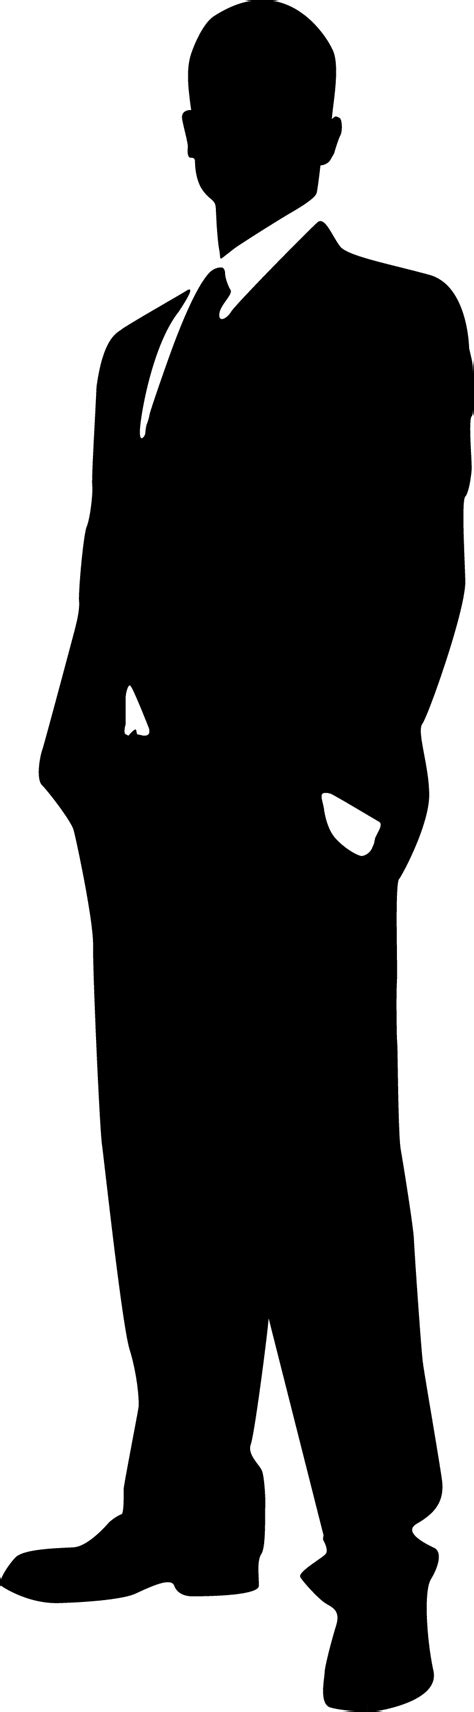 Standing Person Silhouette Images Guru Clipart Best Clipart Best